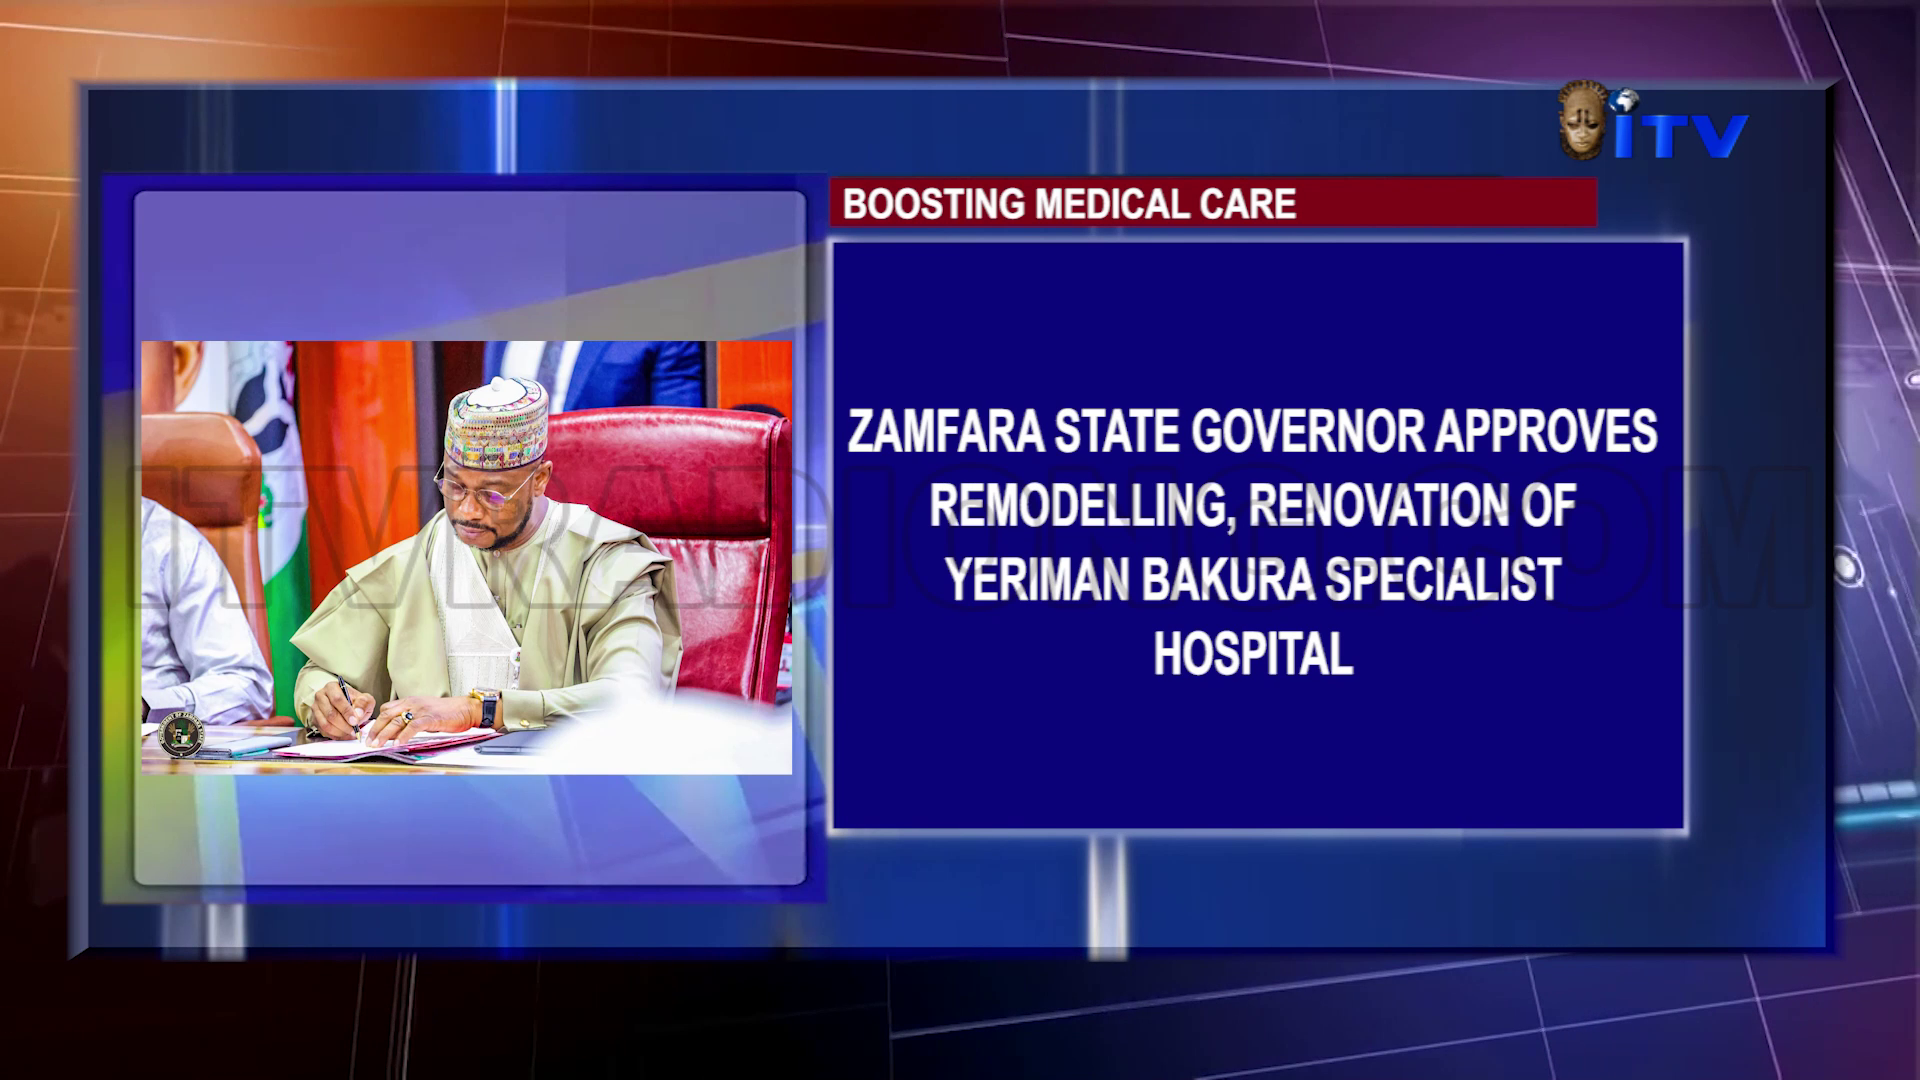 Zamfara State Governor Approves Remodelling, Renovation Of Yeriman Bakura Specialist Hospital